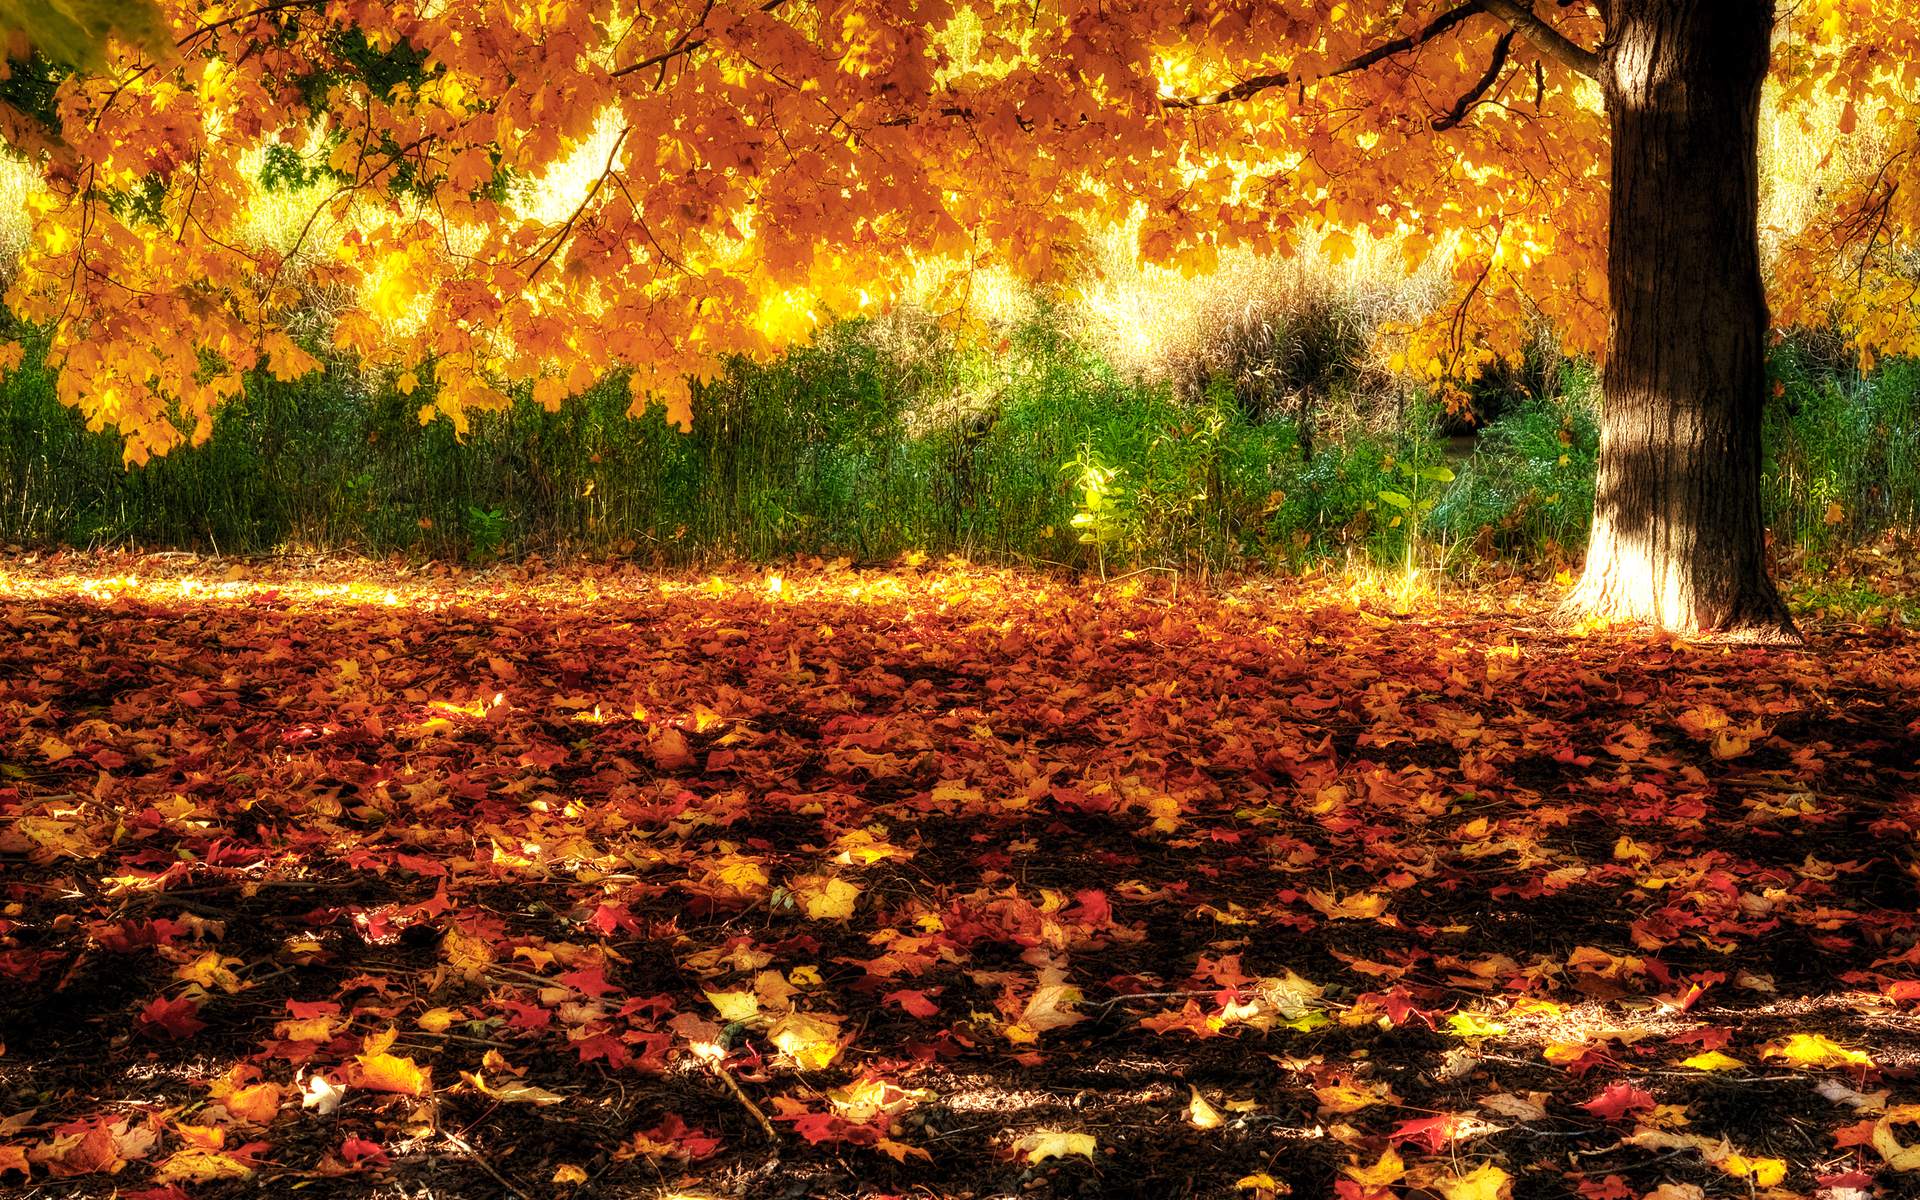 Fall of Autumn Leaves Desktop Wallpaper. Download High Resolution